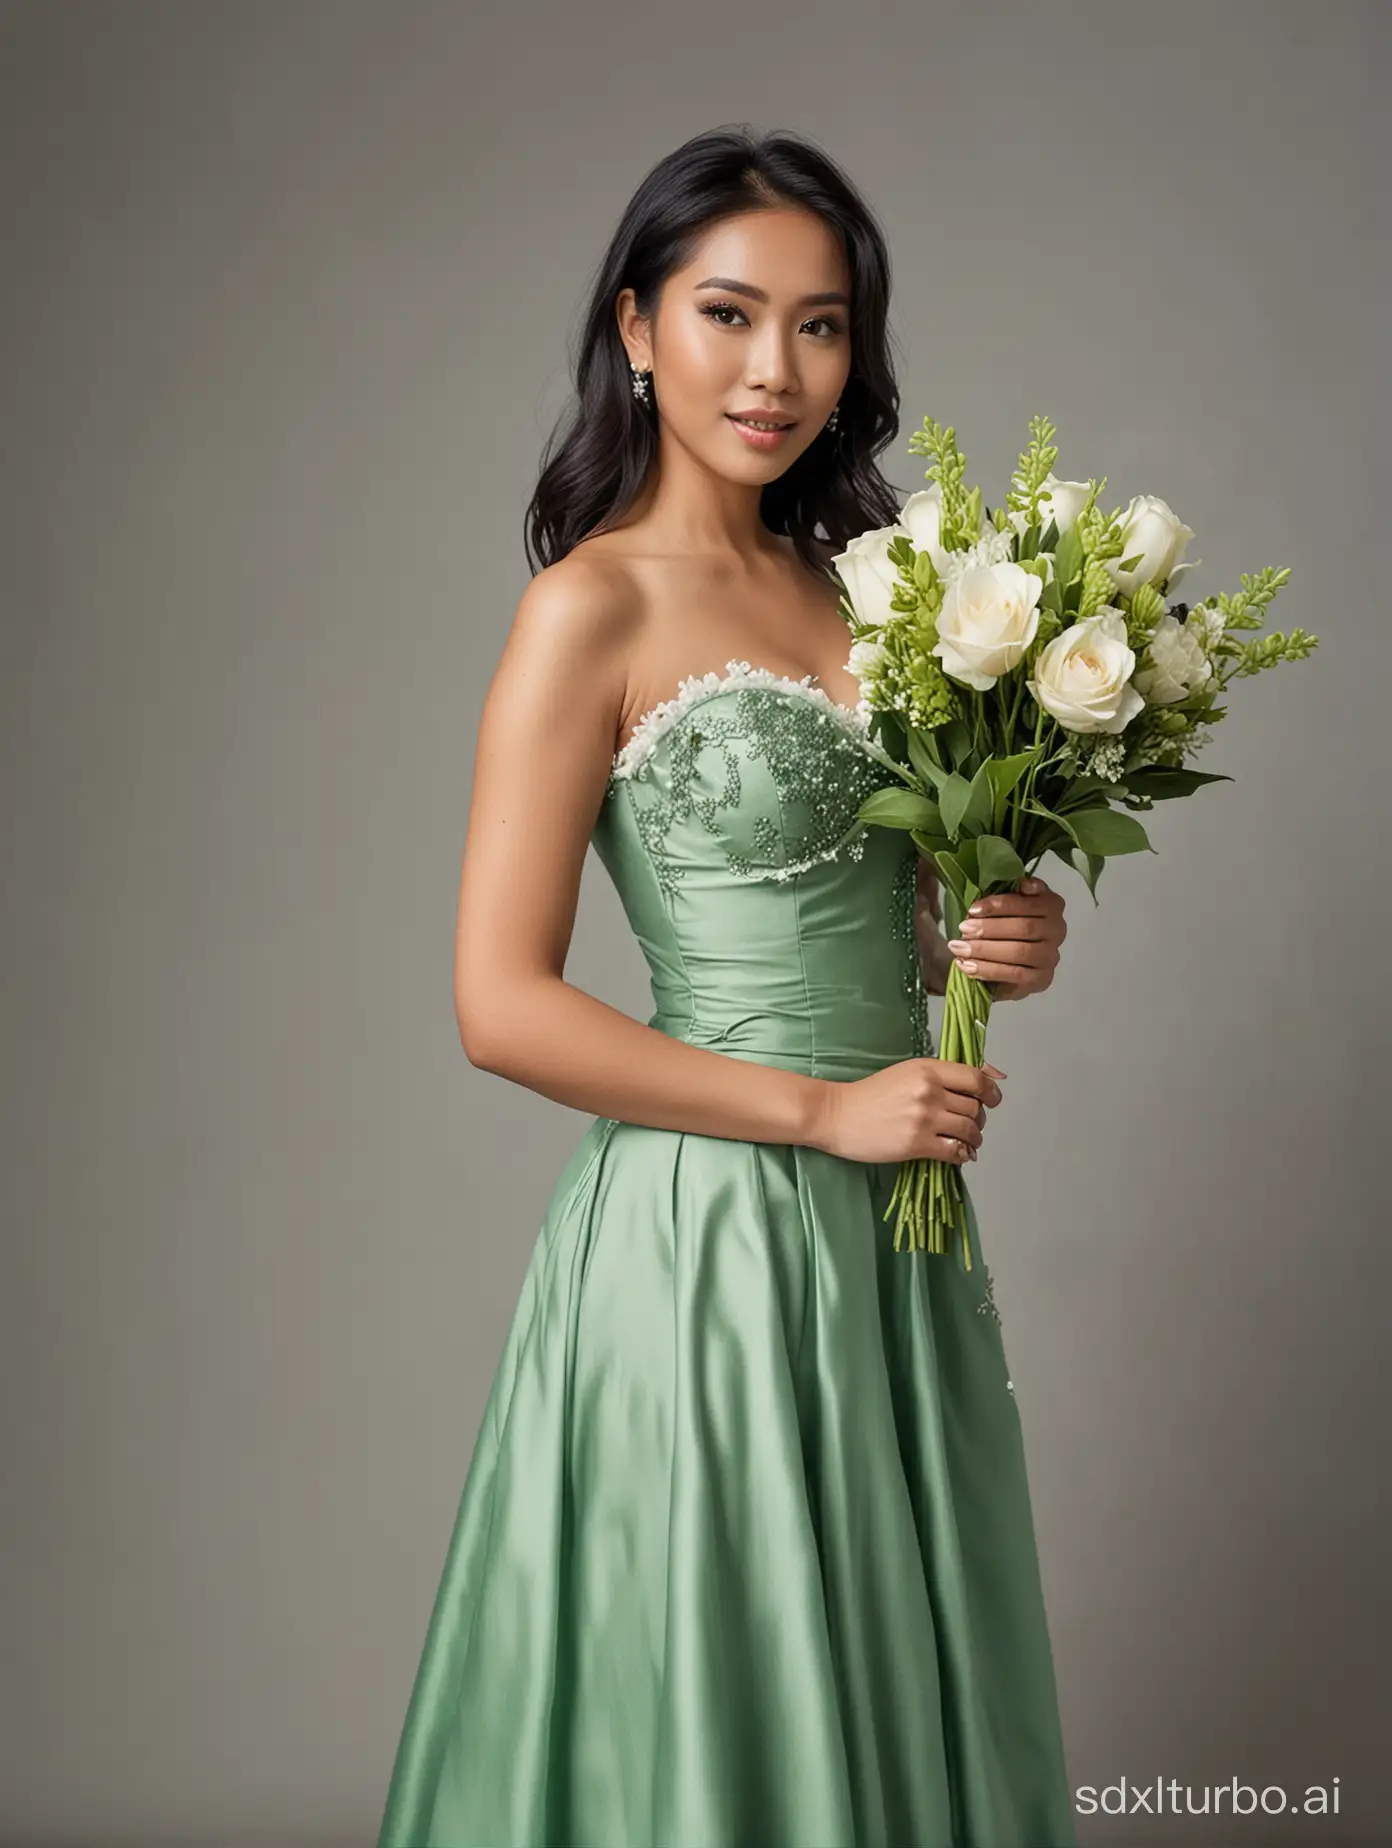 Indonesian-Bride-Holding-Bouquet-in-Green-Bustier-Dress